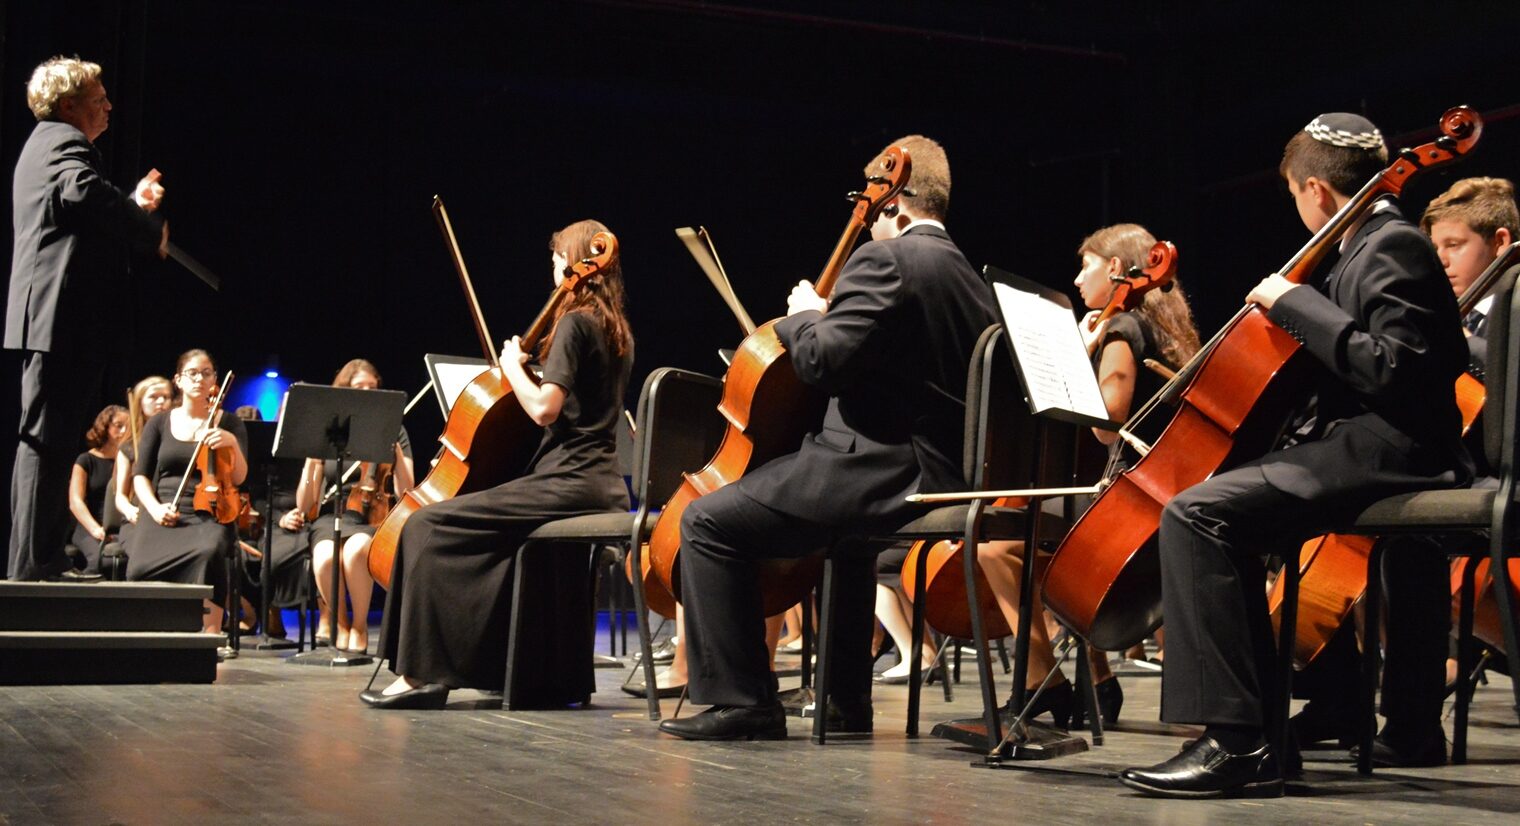 The Maale Adumim Youth Symphony in concert. Photo by Daniel Santacruz